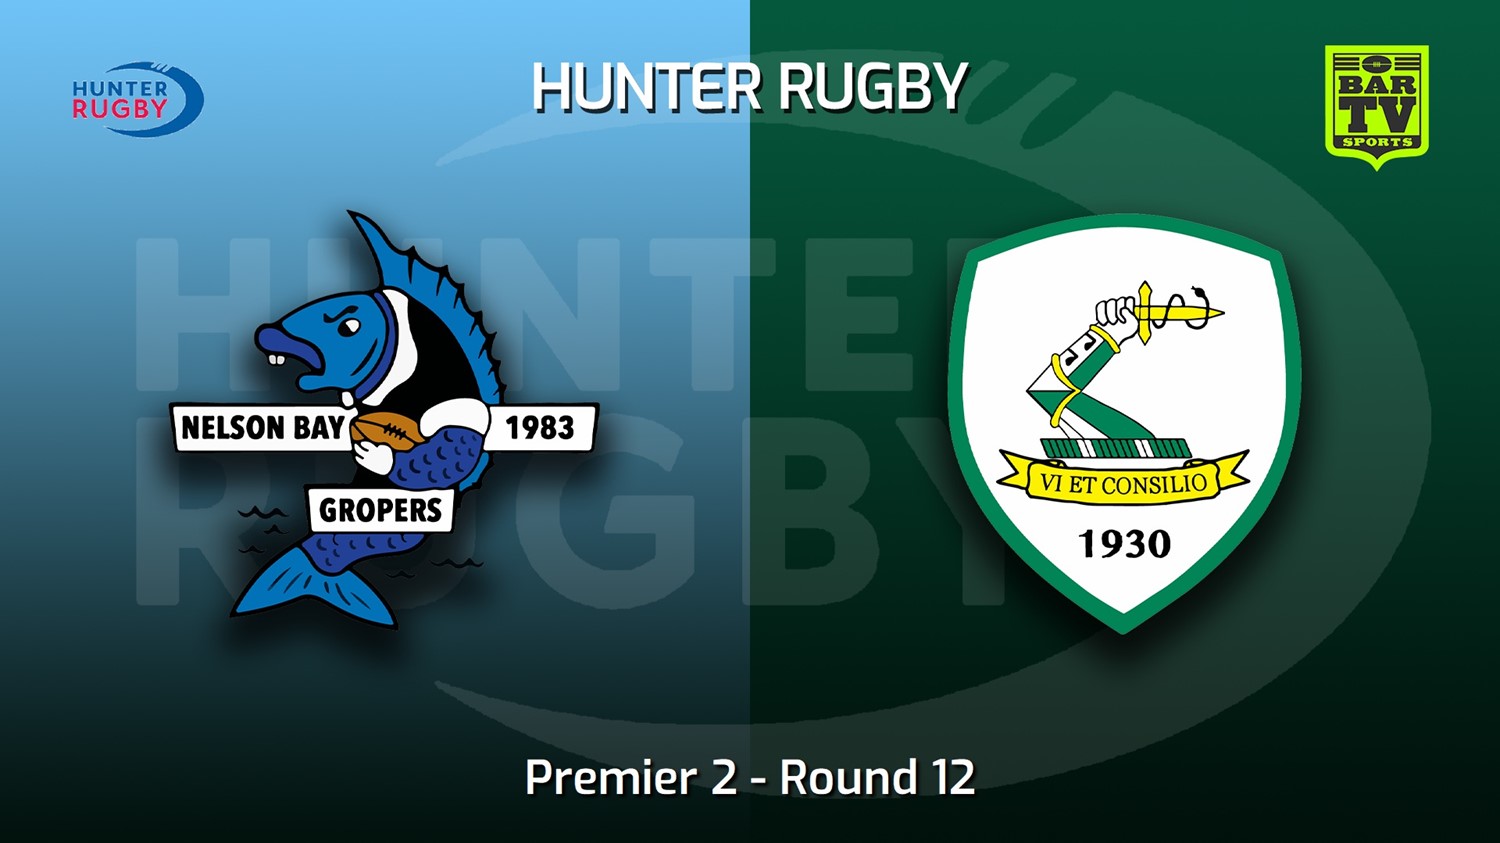 220716-Hunter Rugby Round 12 - Premier 2 - Nelson Bay Gropers v Merewether Carlton Slate Image